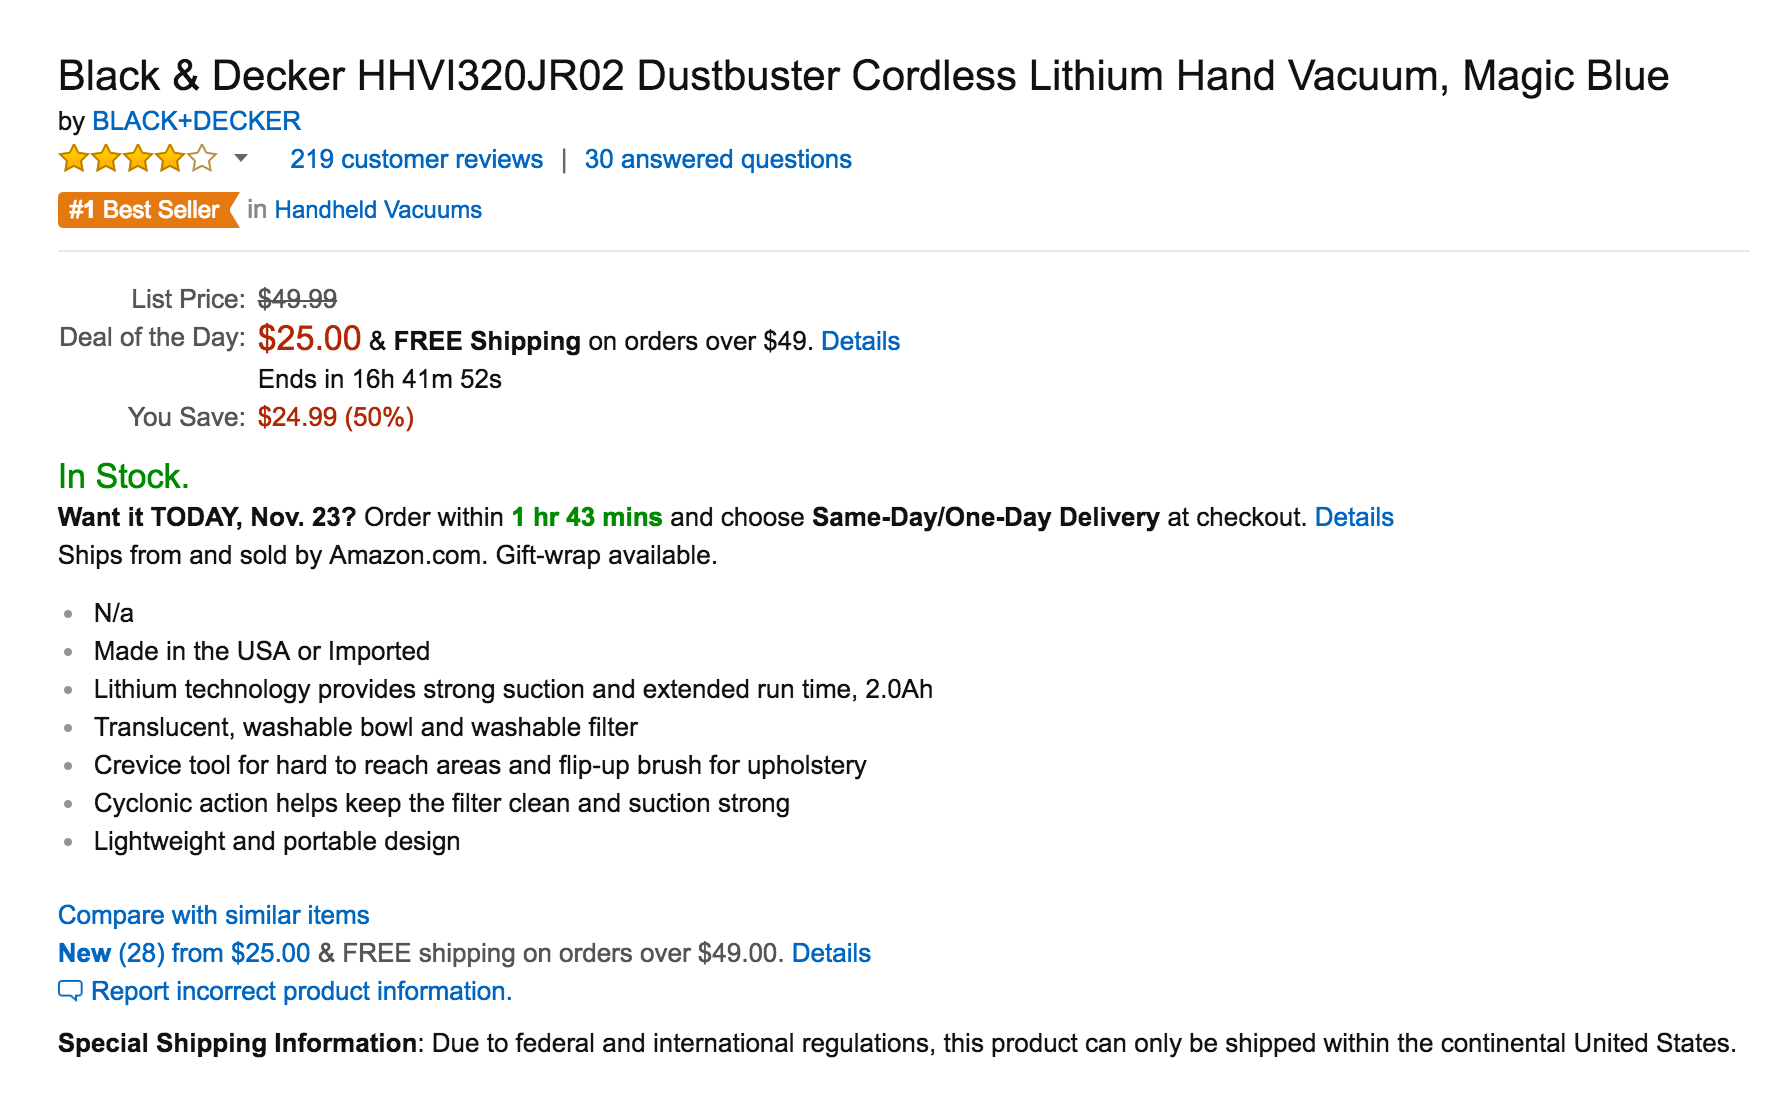 black-decker-dustbuster-cordless-lithium-hand-vacuum-hhvi320jr02-2